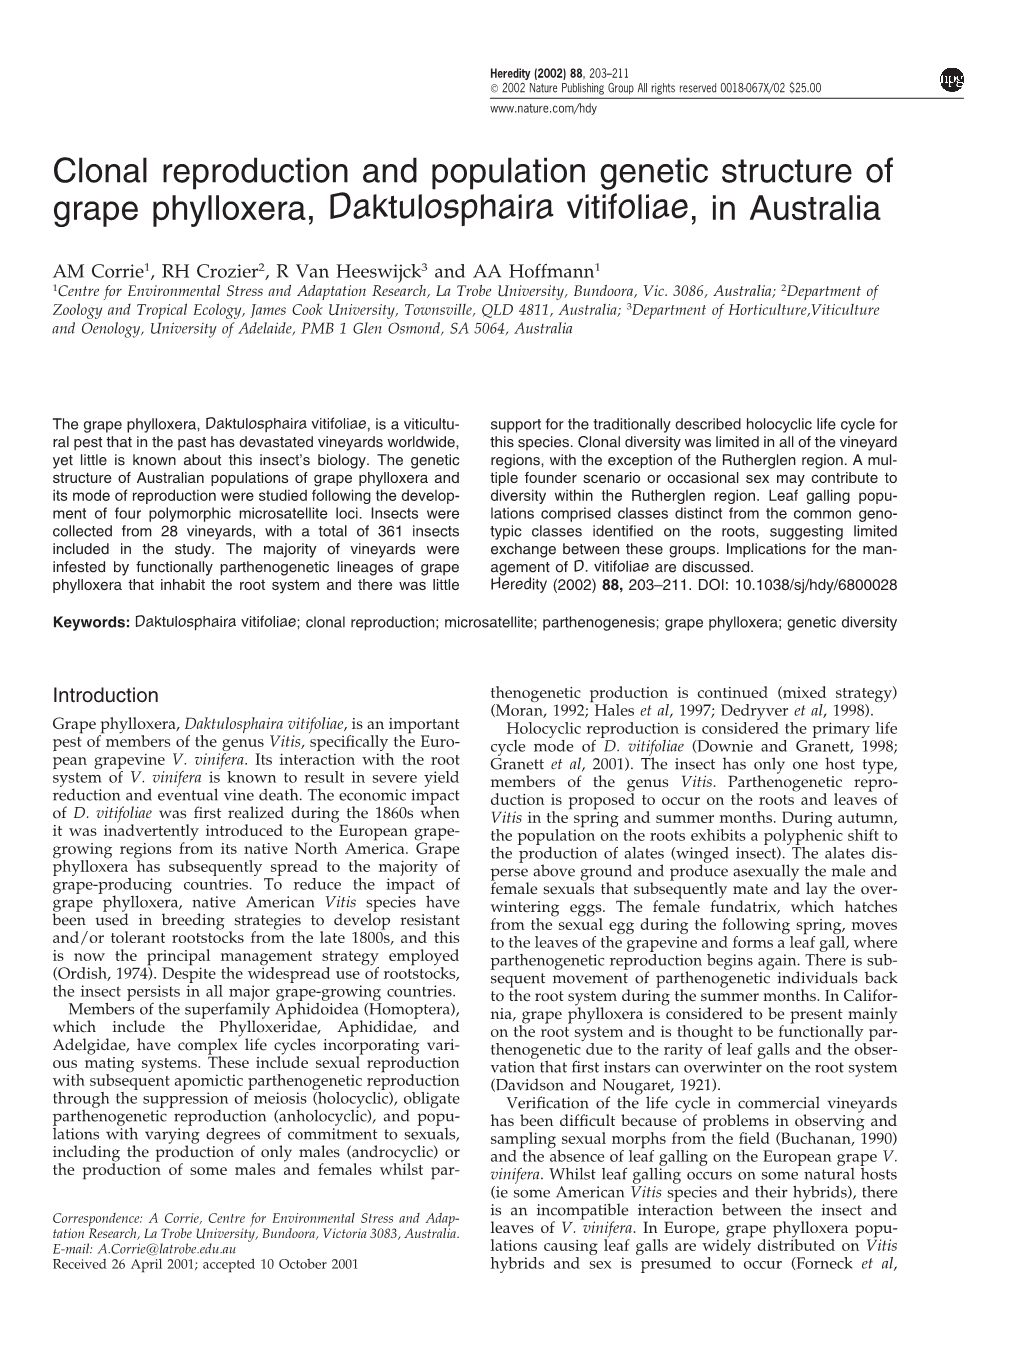 Clonal Reproduction and Population Genetic Structure of Grape Phylloxera, Daktulosphaira Vitifoliae, in Australia